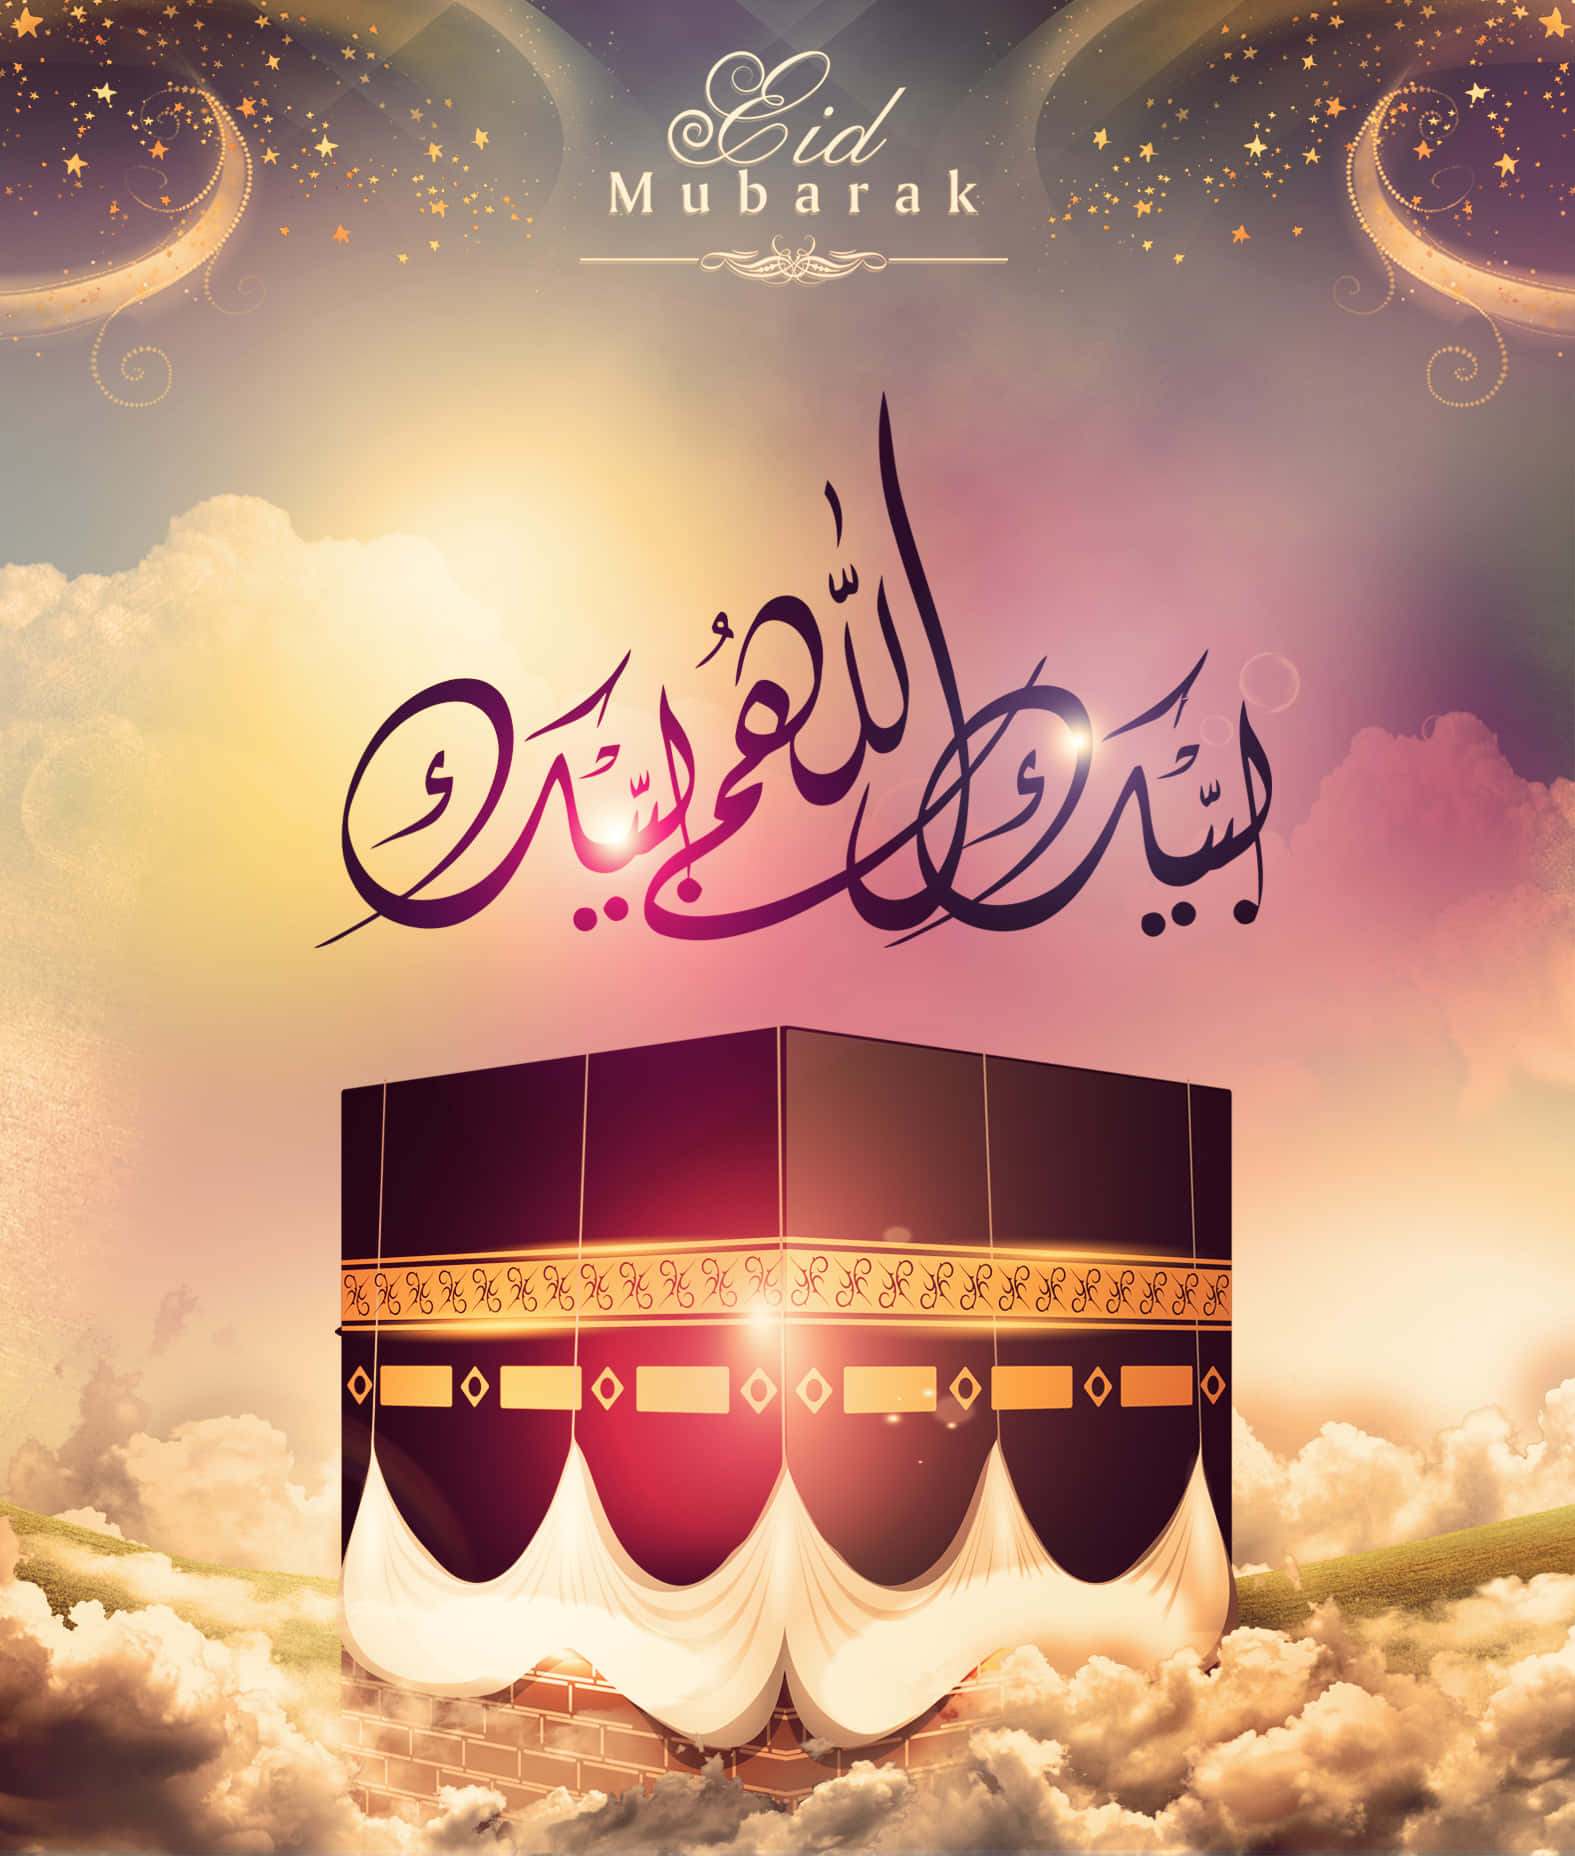 Enmuslimsk Kaaba Med Skyer Og Himmel.